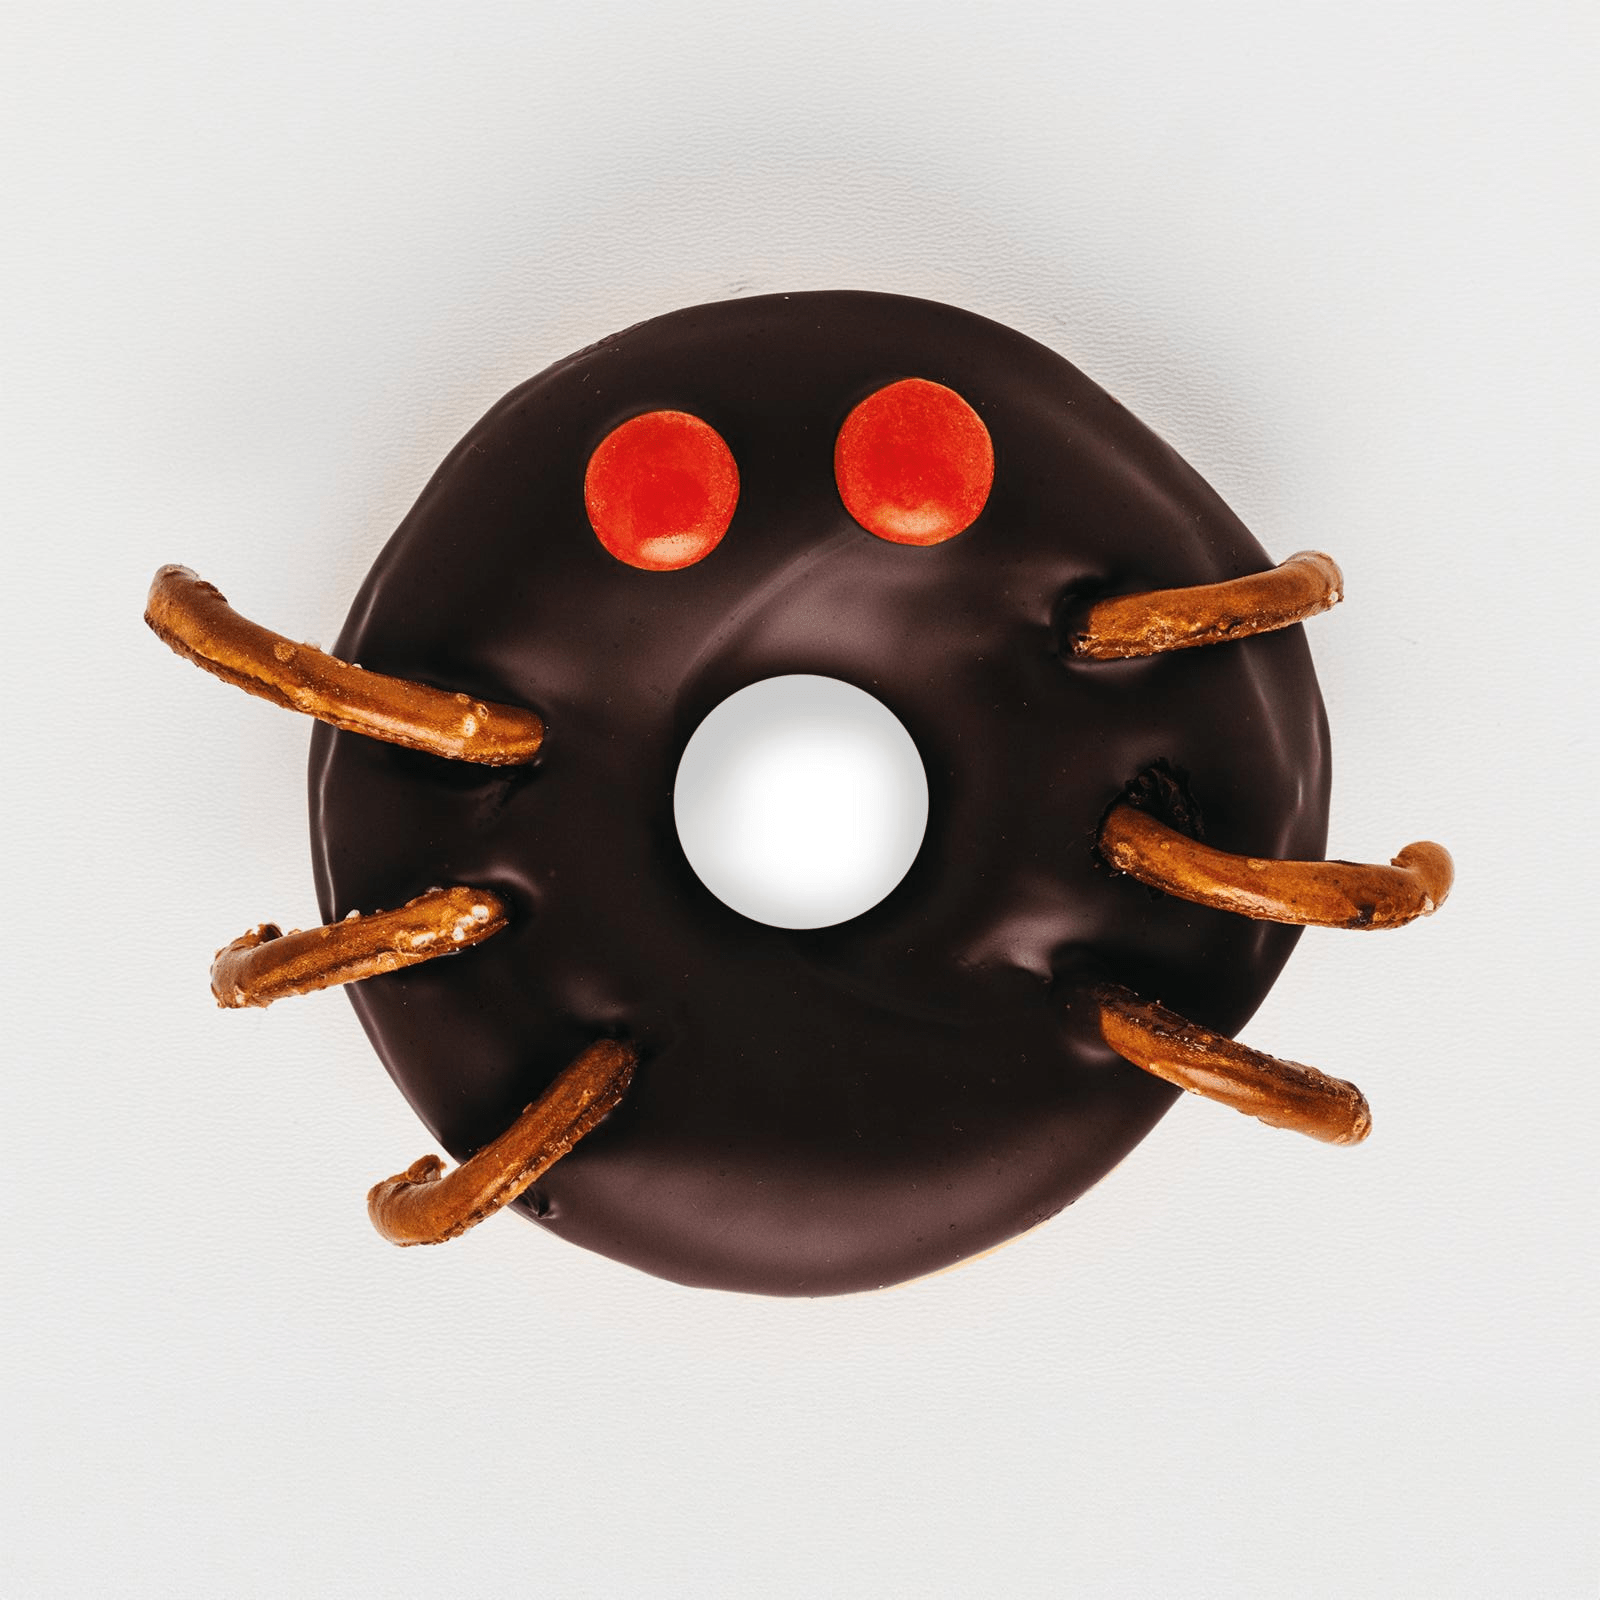 Spin donut